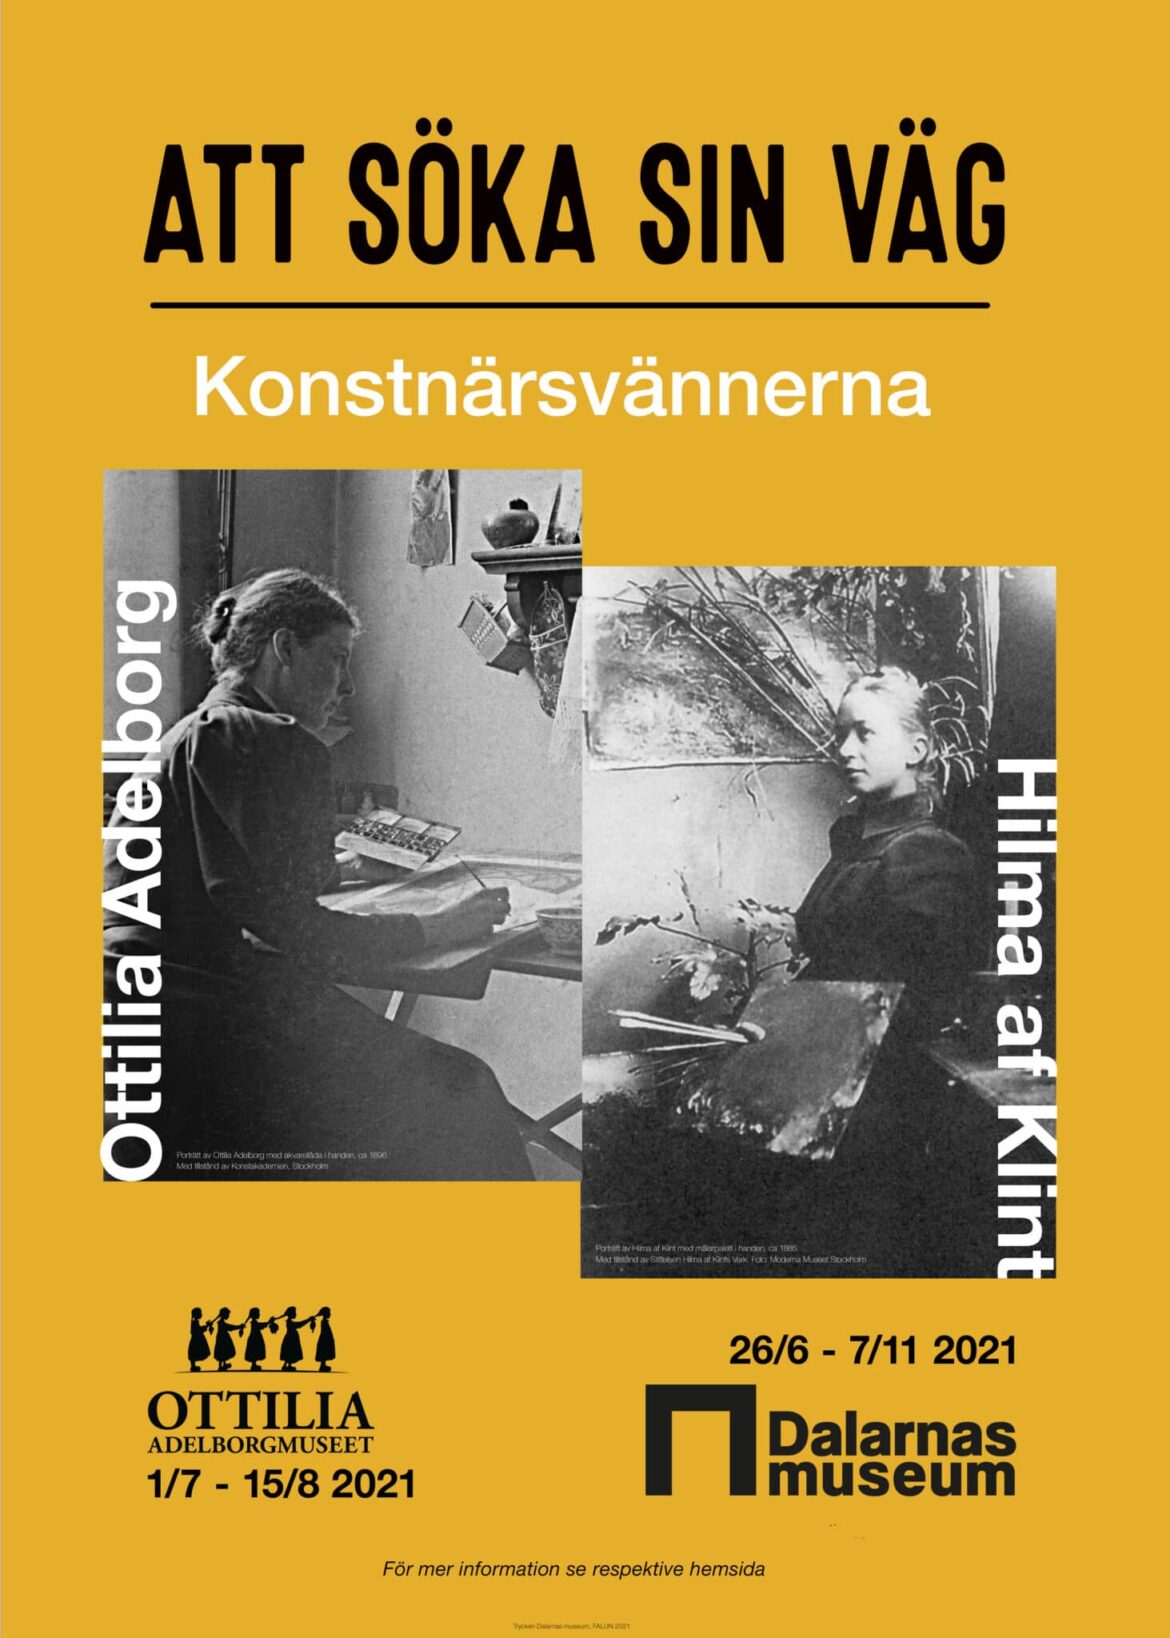 Affisch utställning Hilma af Klint Ottilia Adelborg 2021